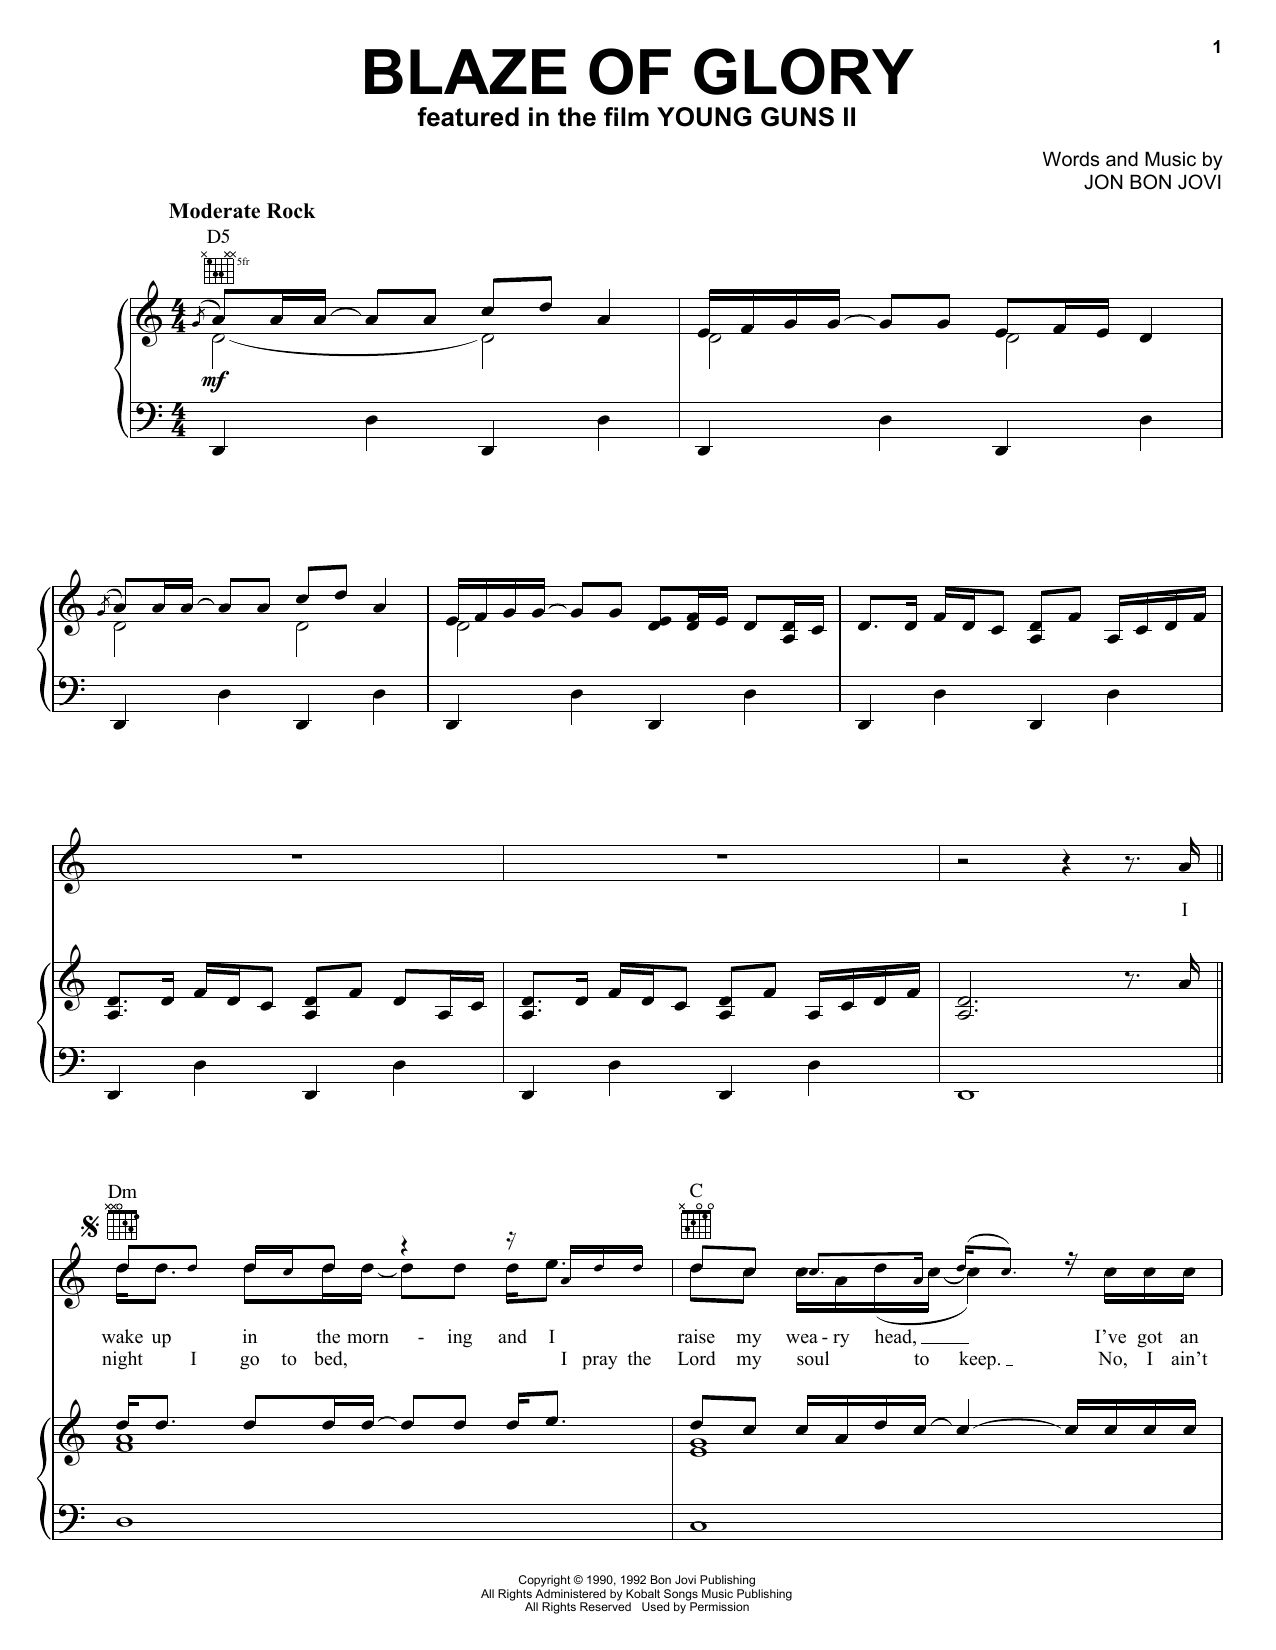 Jon Bon Jovi Blaze Of Glory Sheet Music Notes & Chords for Melody Line, Lyrics & Chords - Download or Print PDF